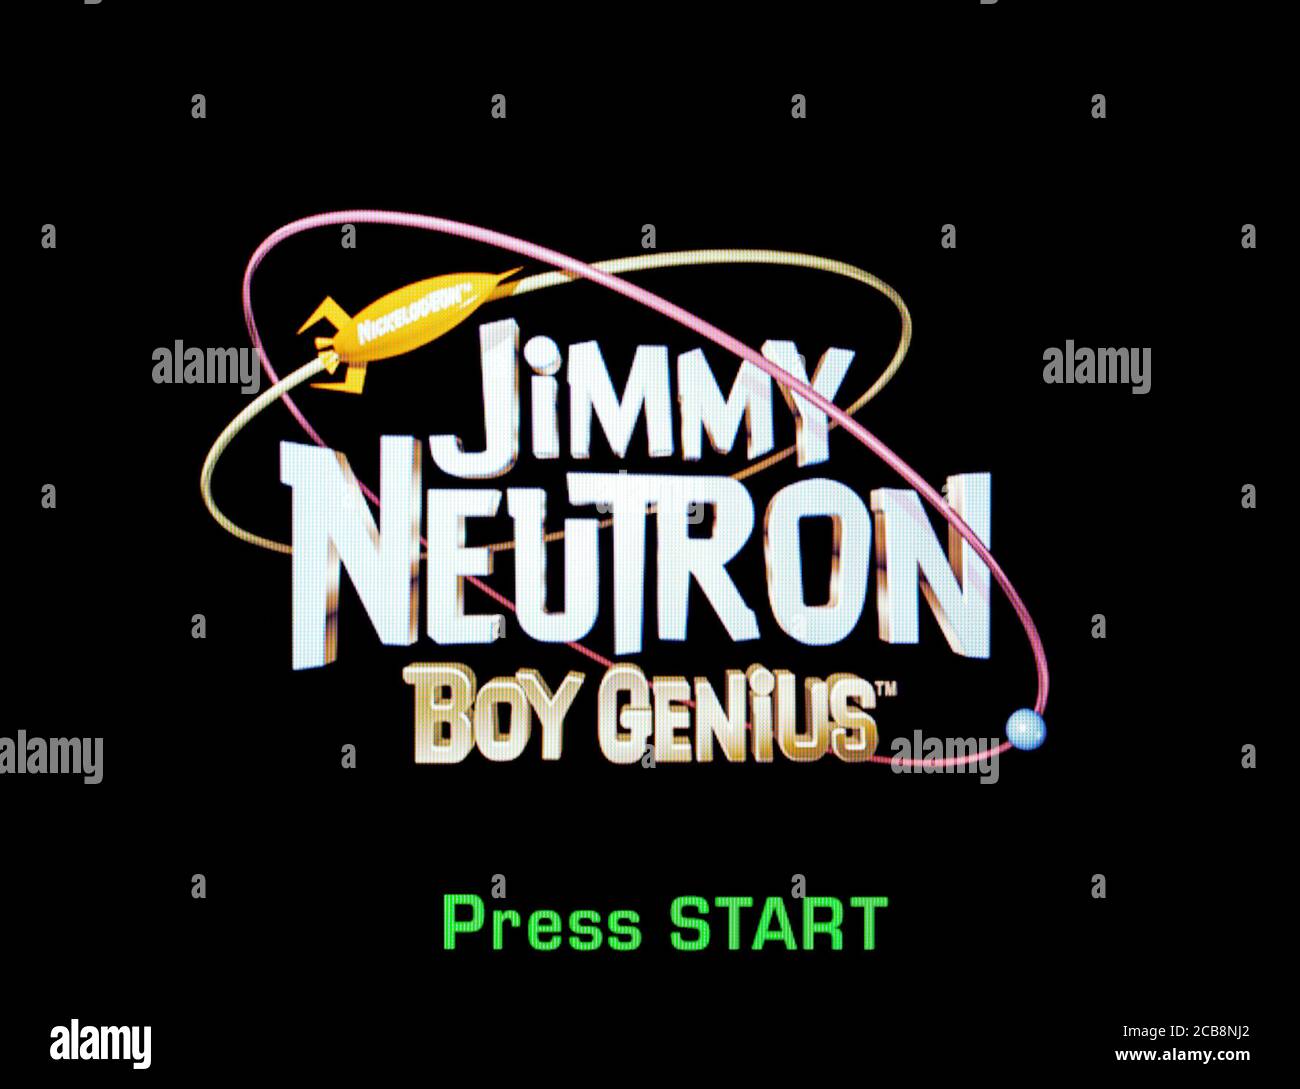 Jimmy Neutron Boy Genius - Nintendo Gamecube Videogame - Editorial use only Stock Photo